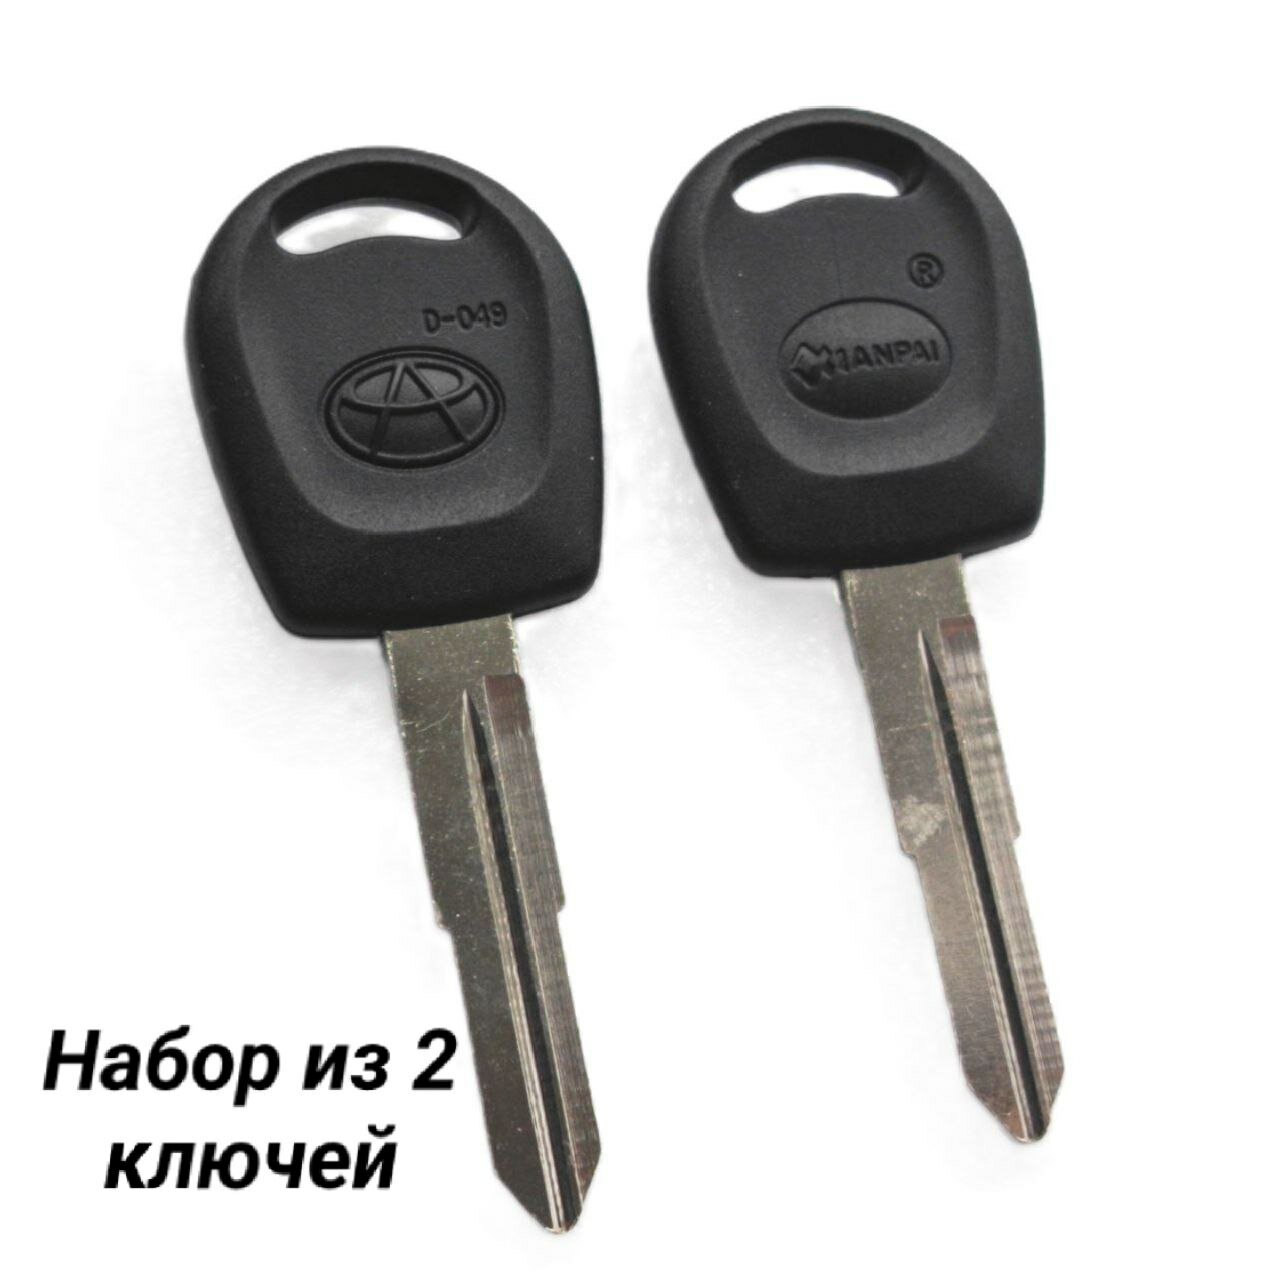 Автомобильный плоский ключ без места под чип WT7CP Chery лого "D-049" (455(23)х82мм сталь)